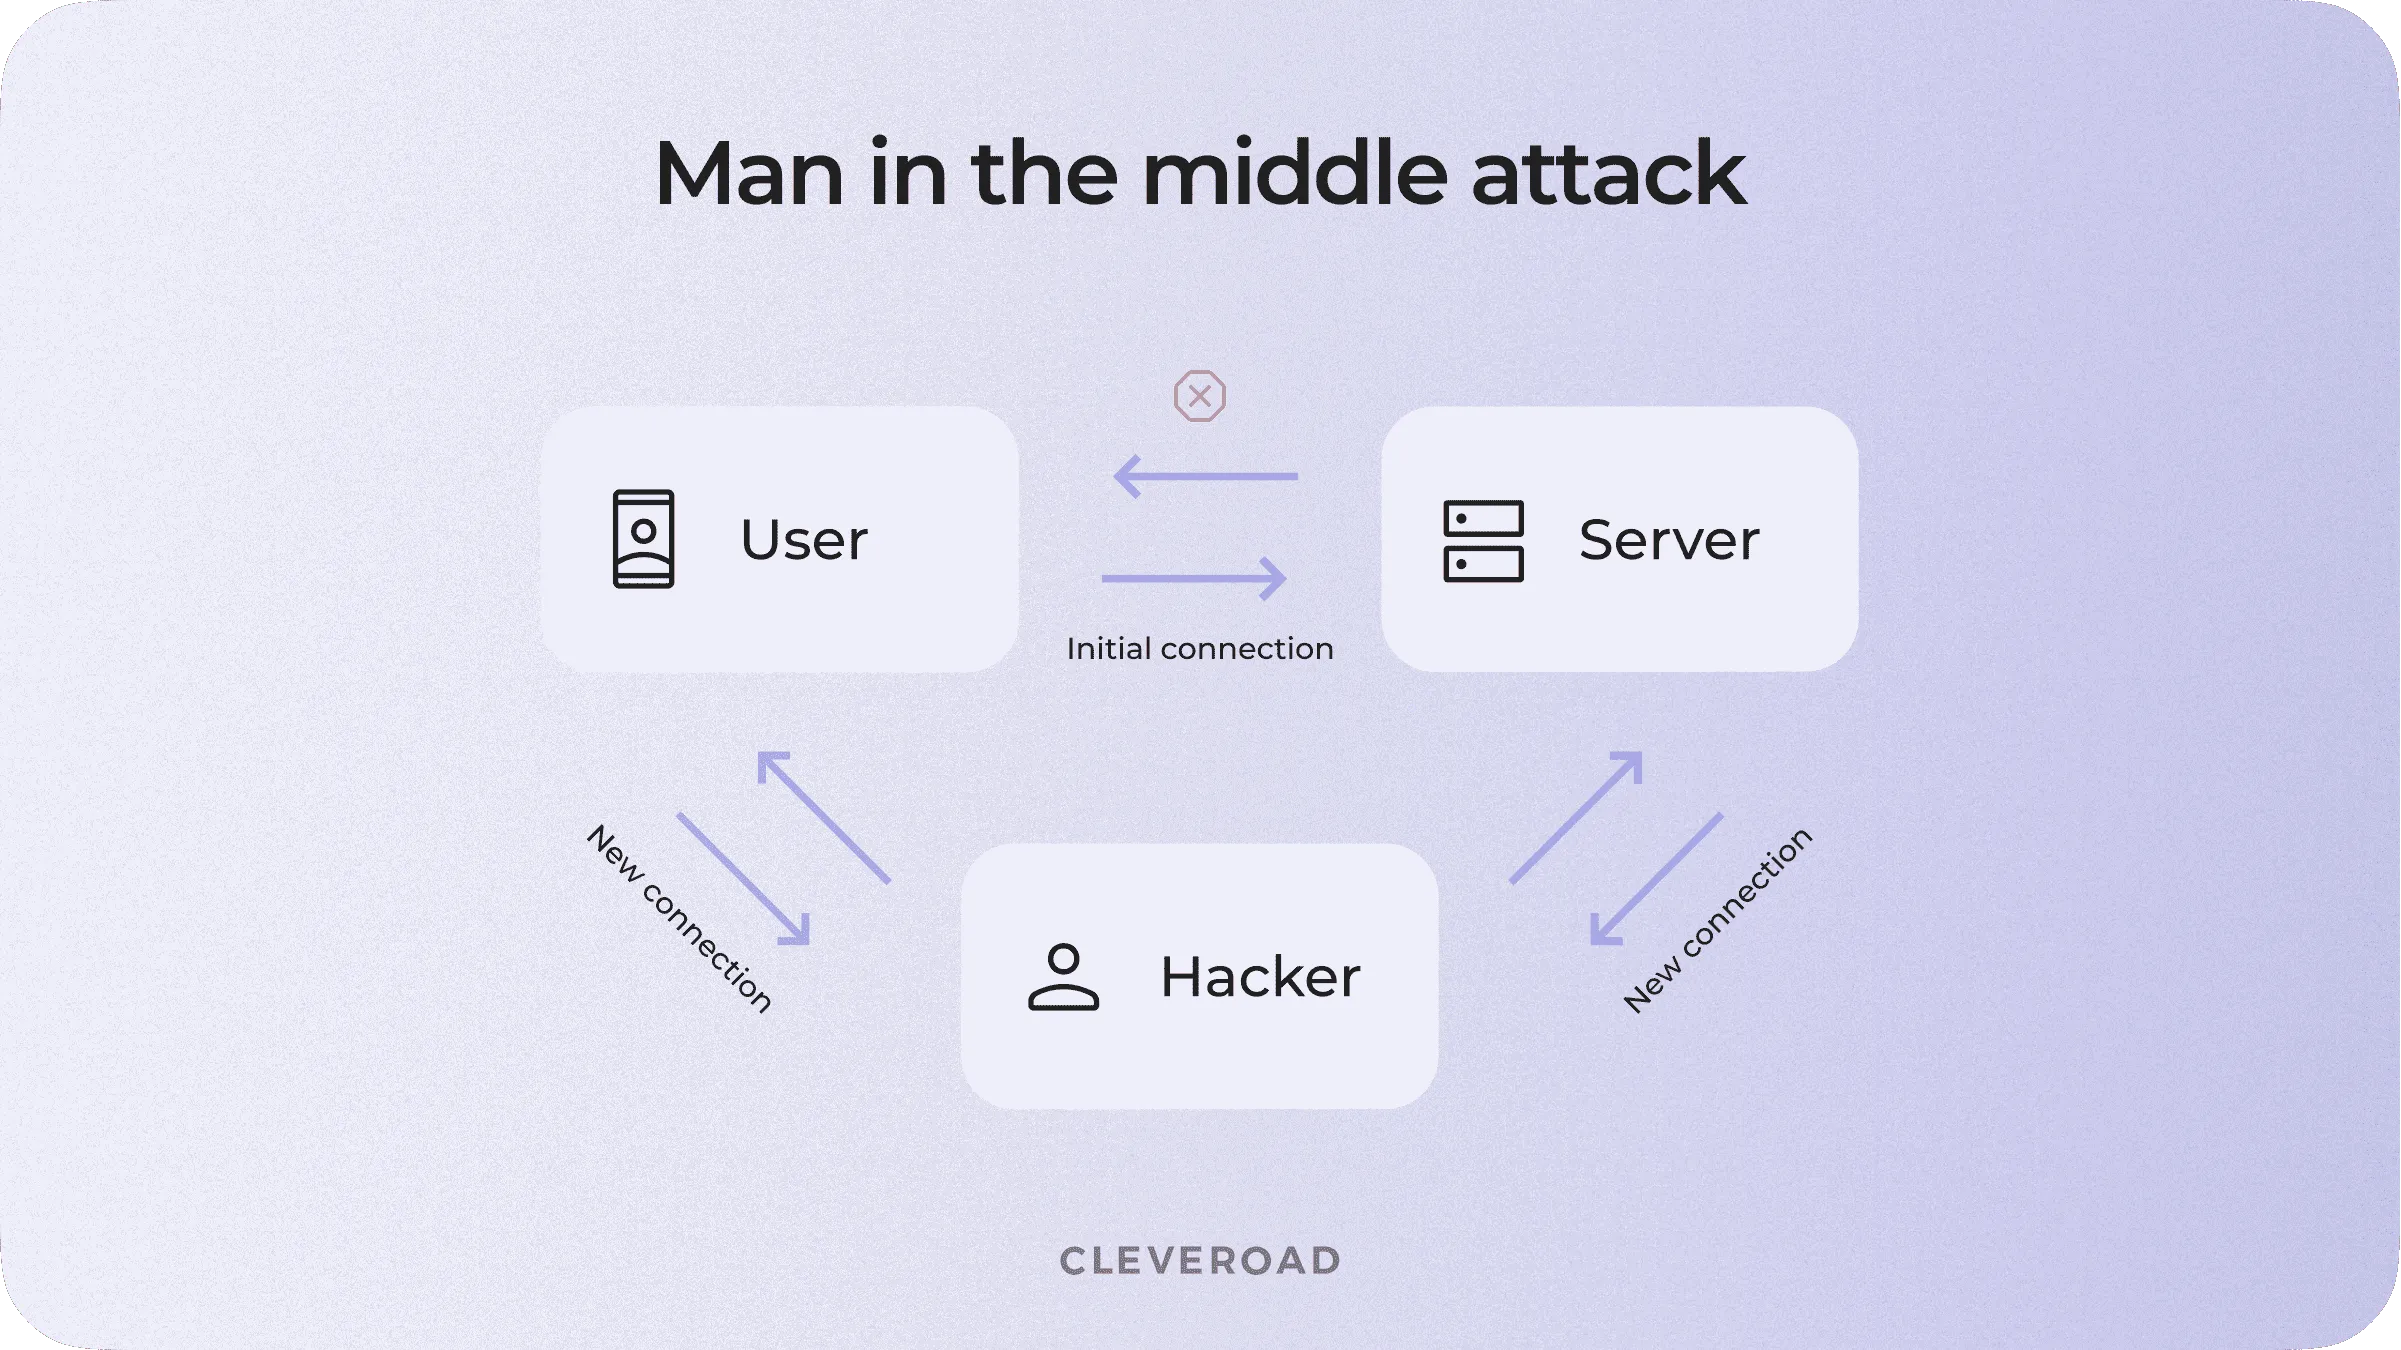 Cellular network vulnerabilities: MITM attack